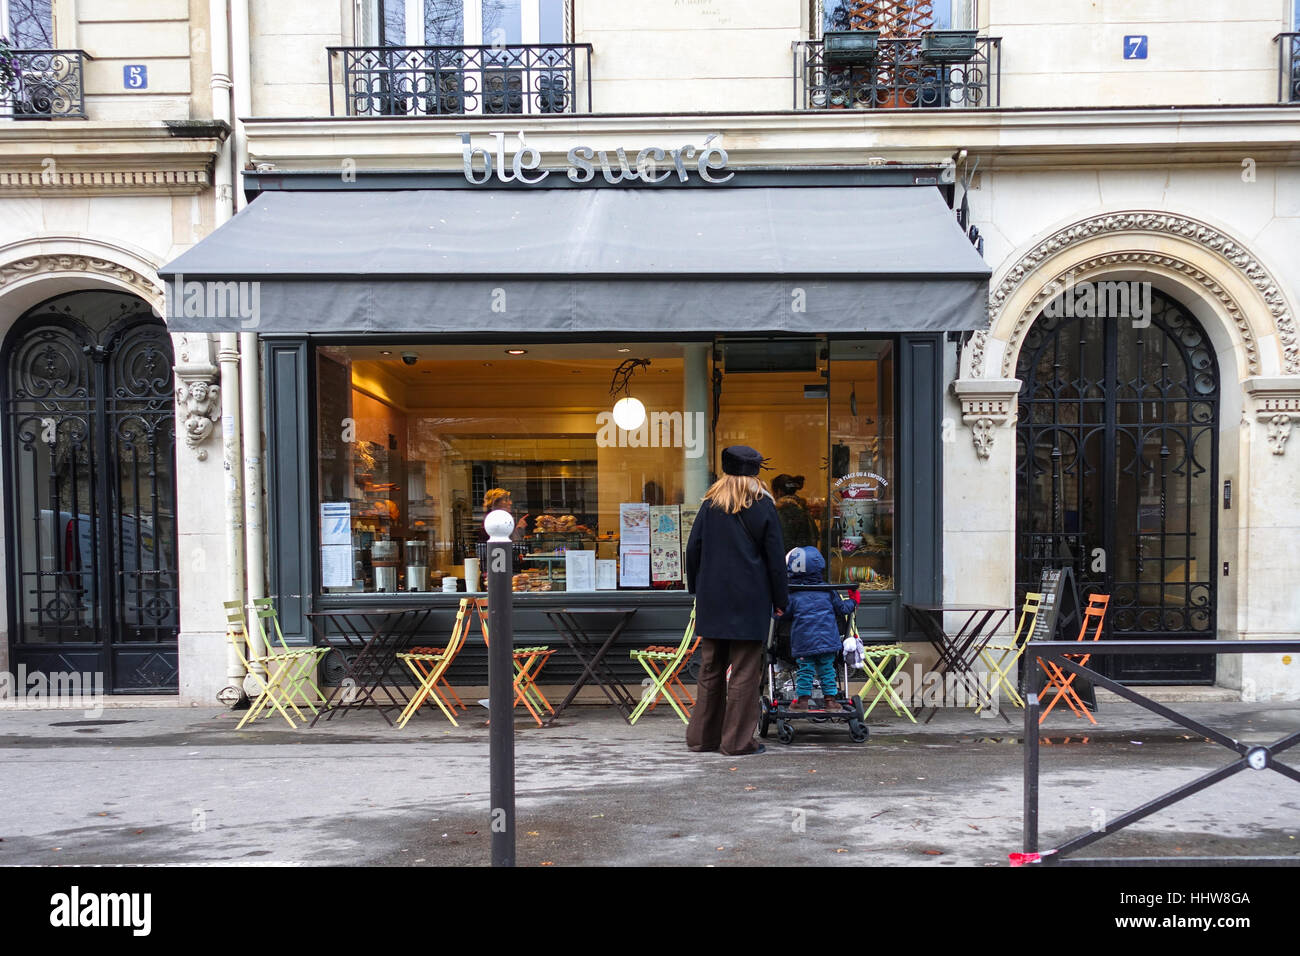 Ble sucre, panetteria e pasticceria Shop presso Square Trousseau, Parigi Francia Foto Stock